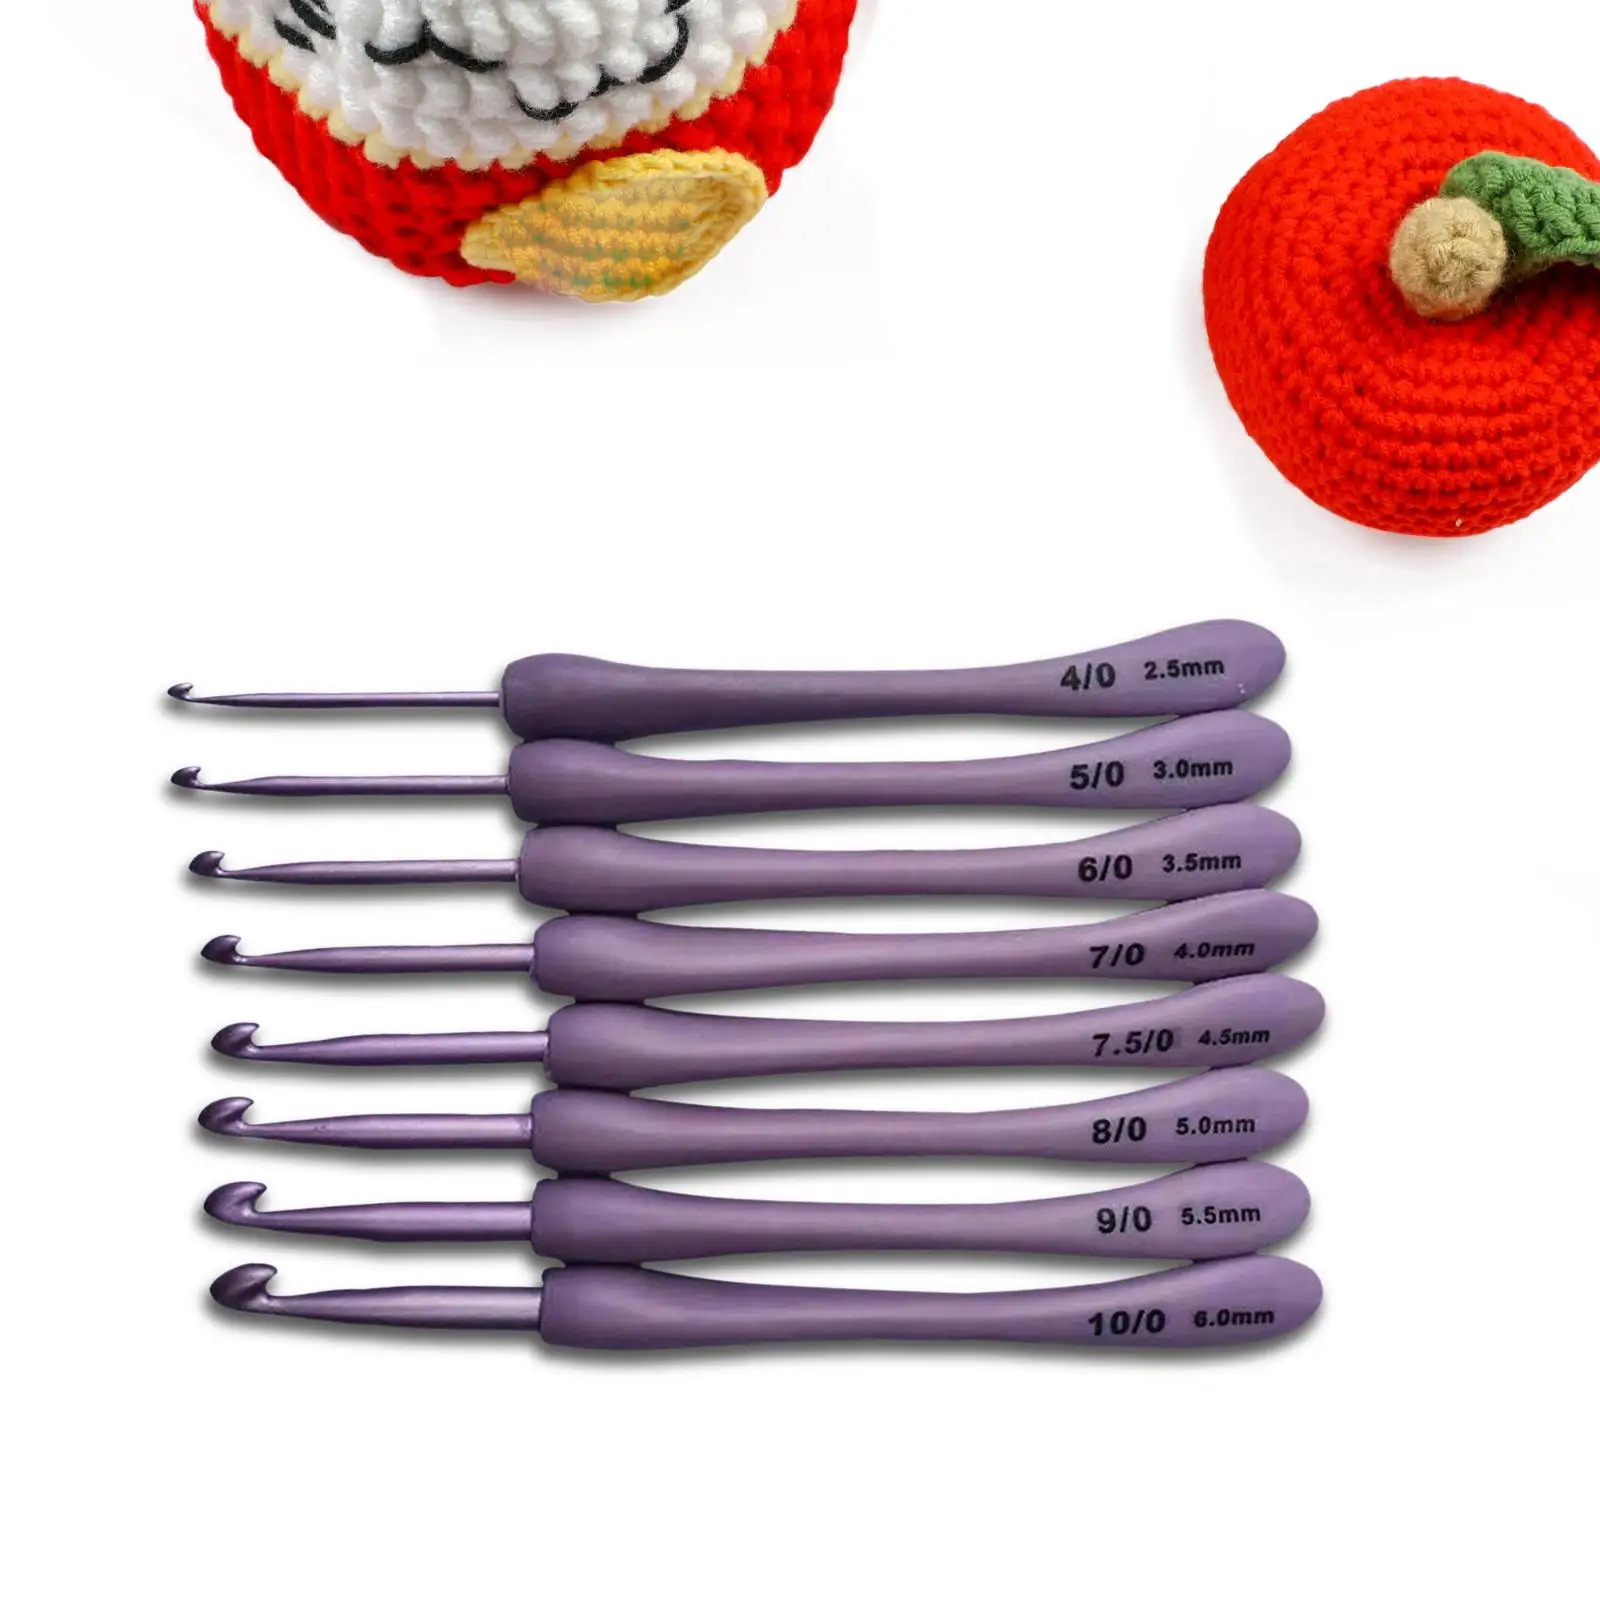 Crochet Needles Set Ergonomic Handle Accessories 2.5mm - 6mm for DIY Crochet Knitting Tools